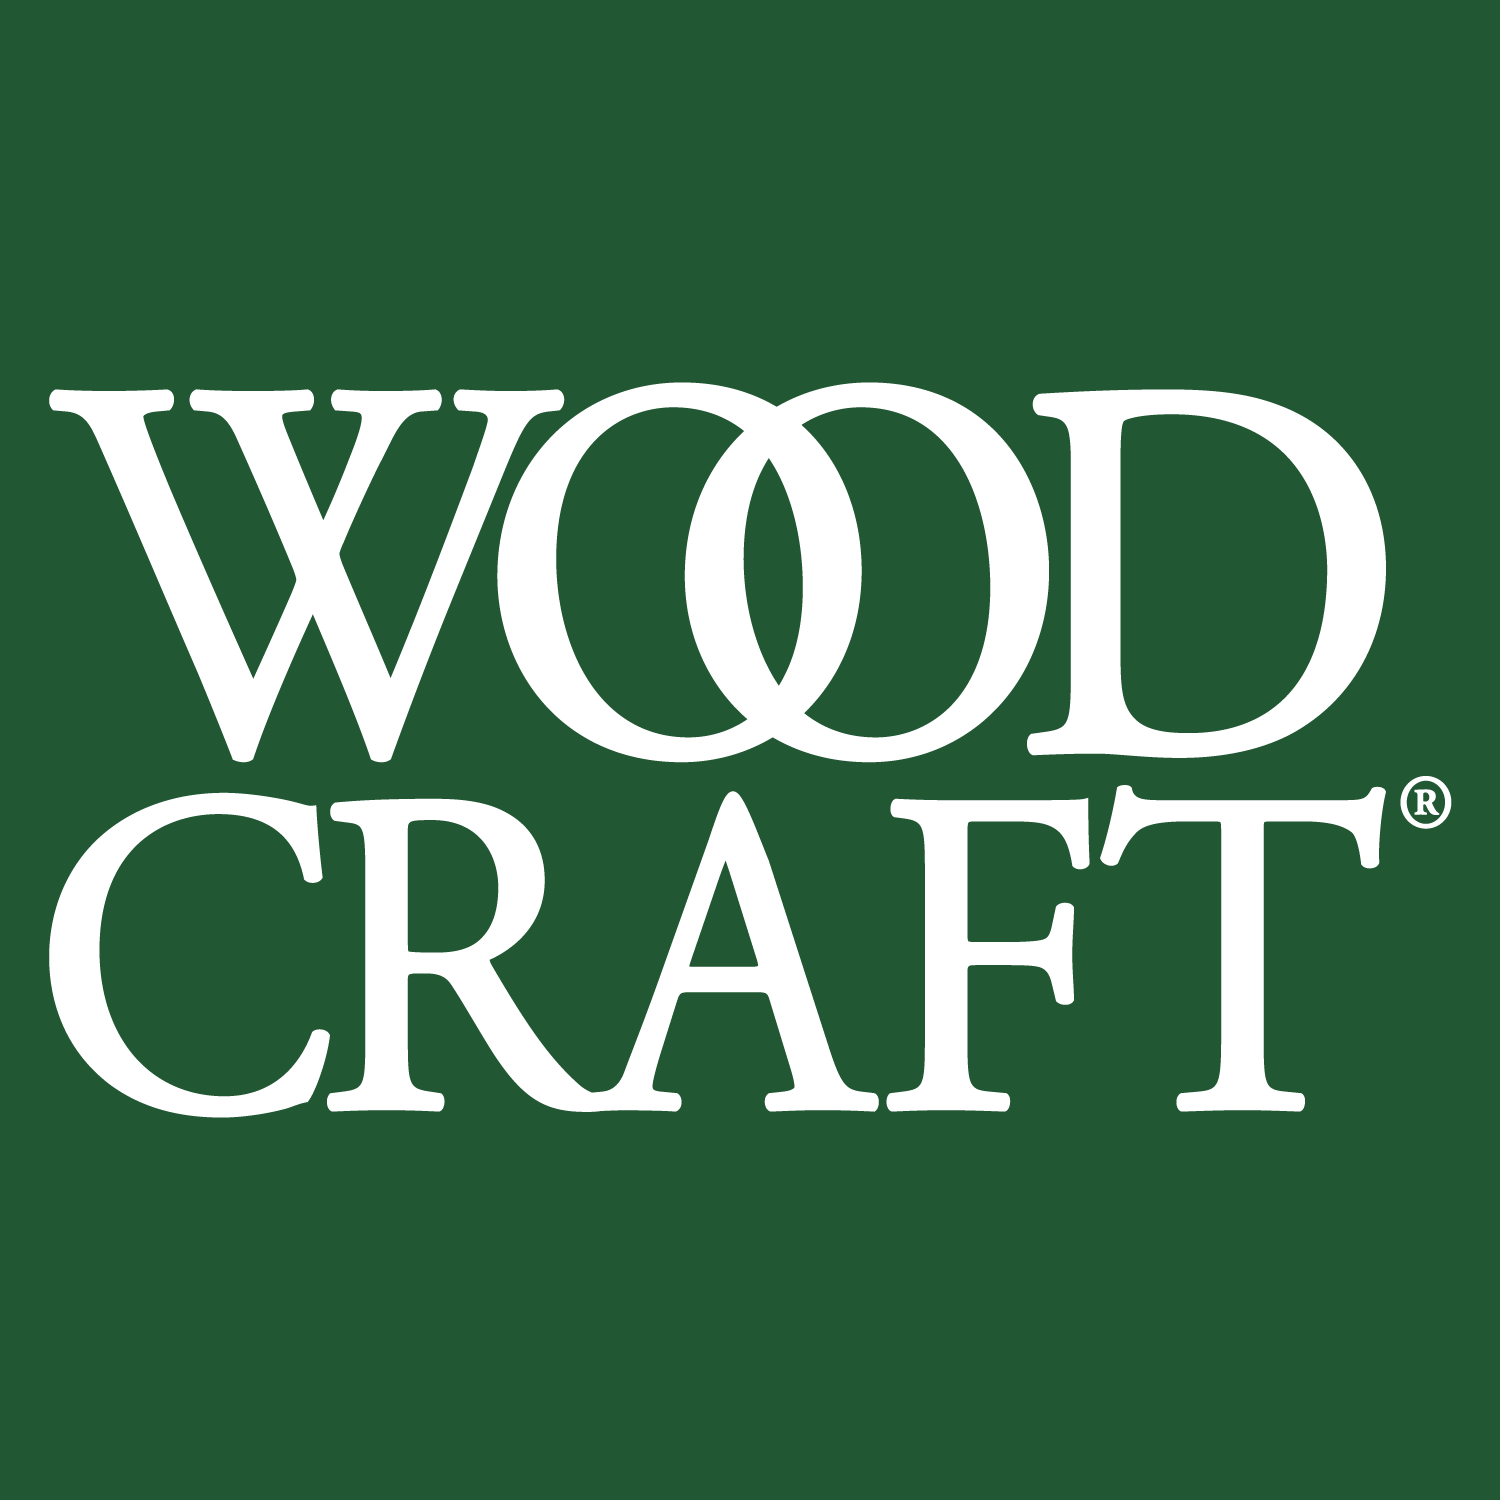 www.woodcraft.com